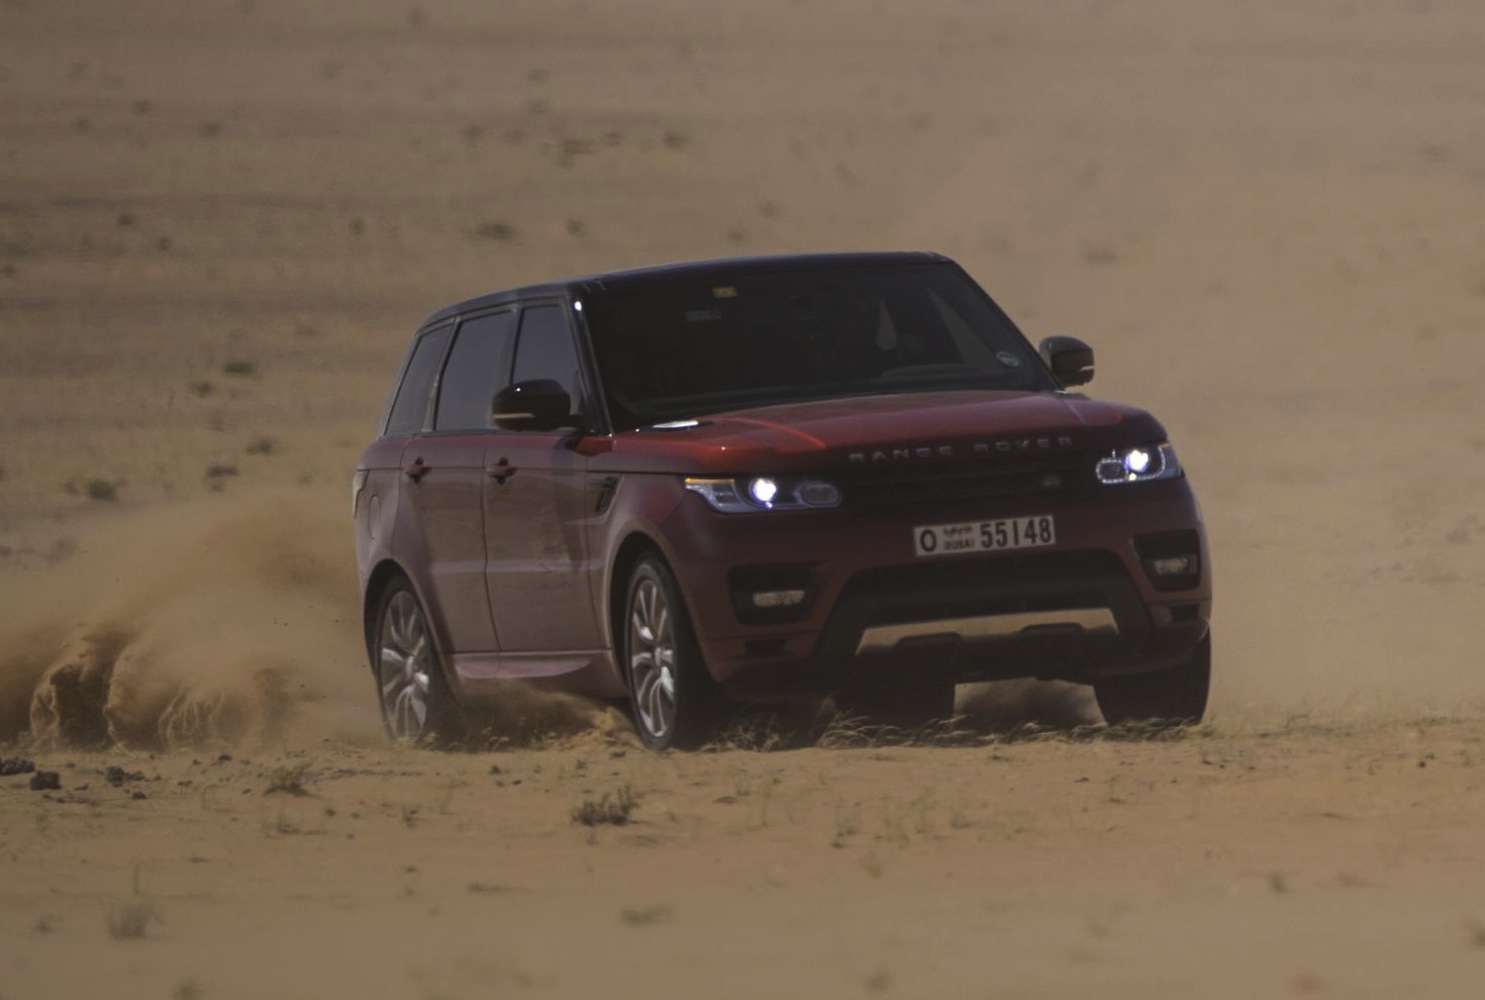 Range Rover Sport sets record for ‘The Empty Quarter’ trek